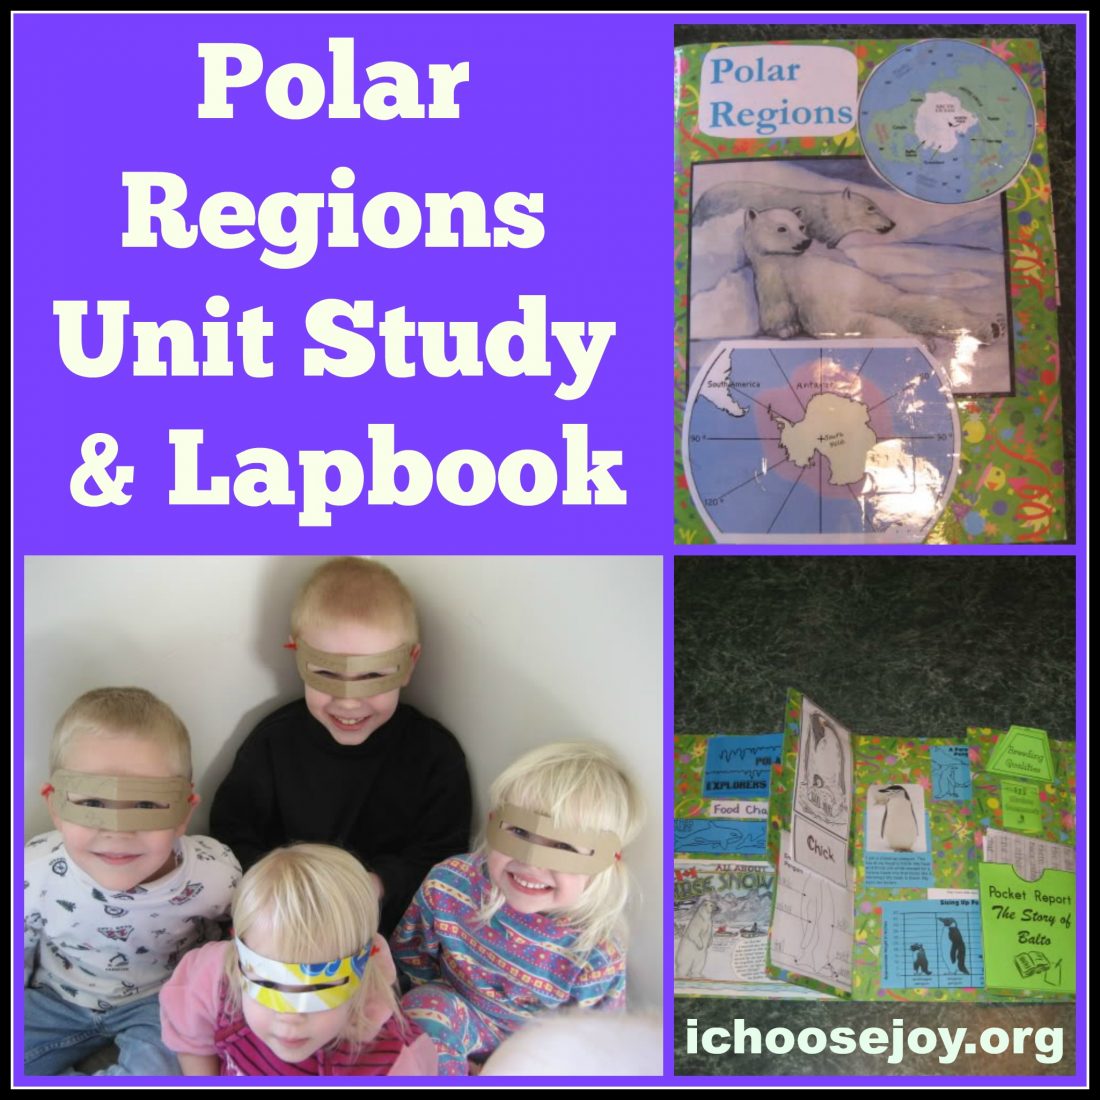 Polar Regions unit study and lapbook